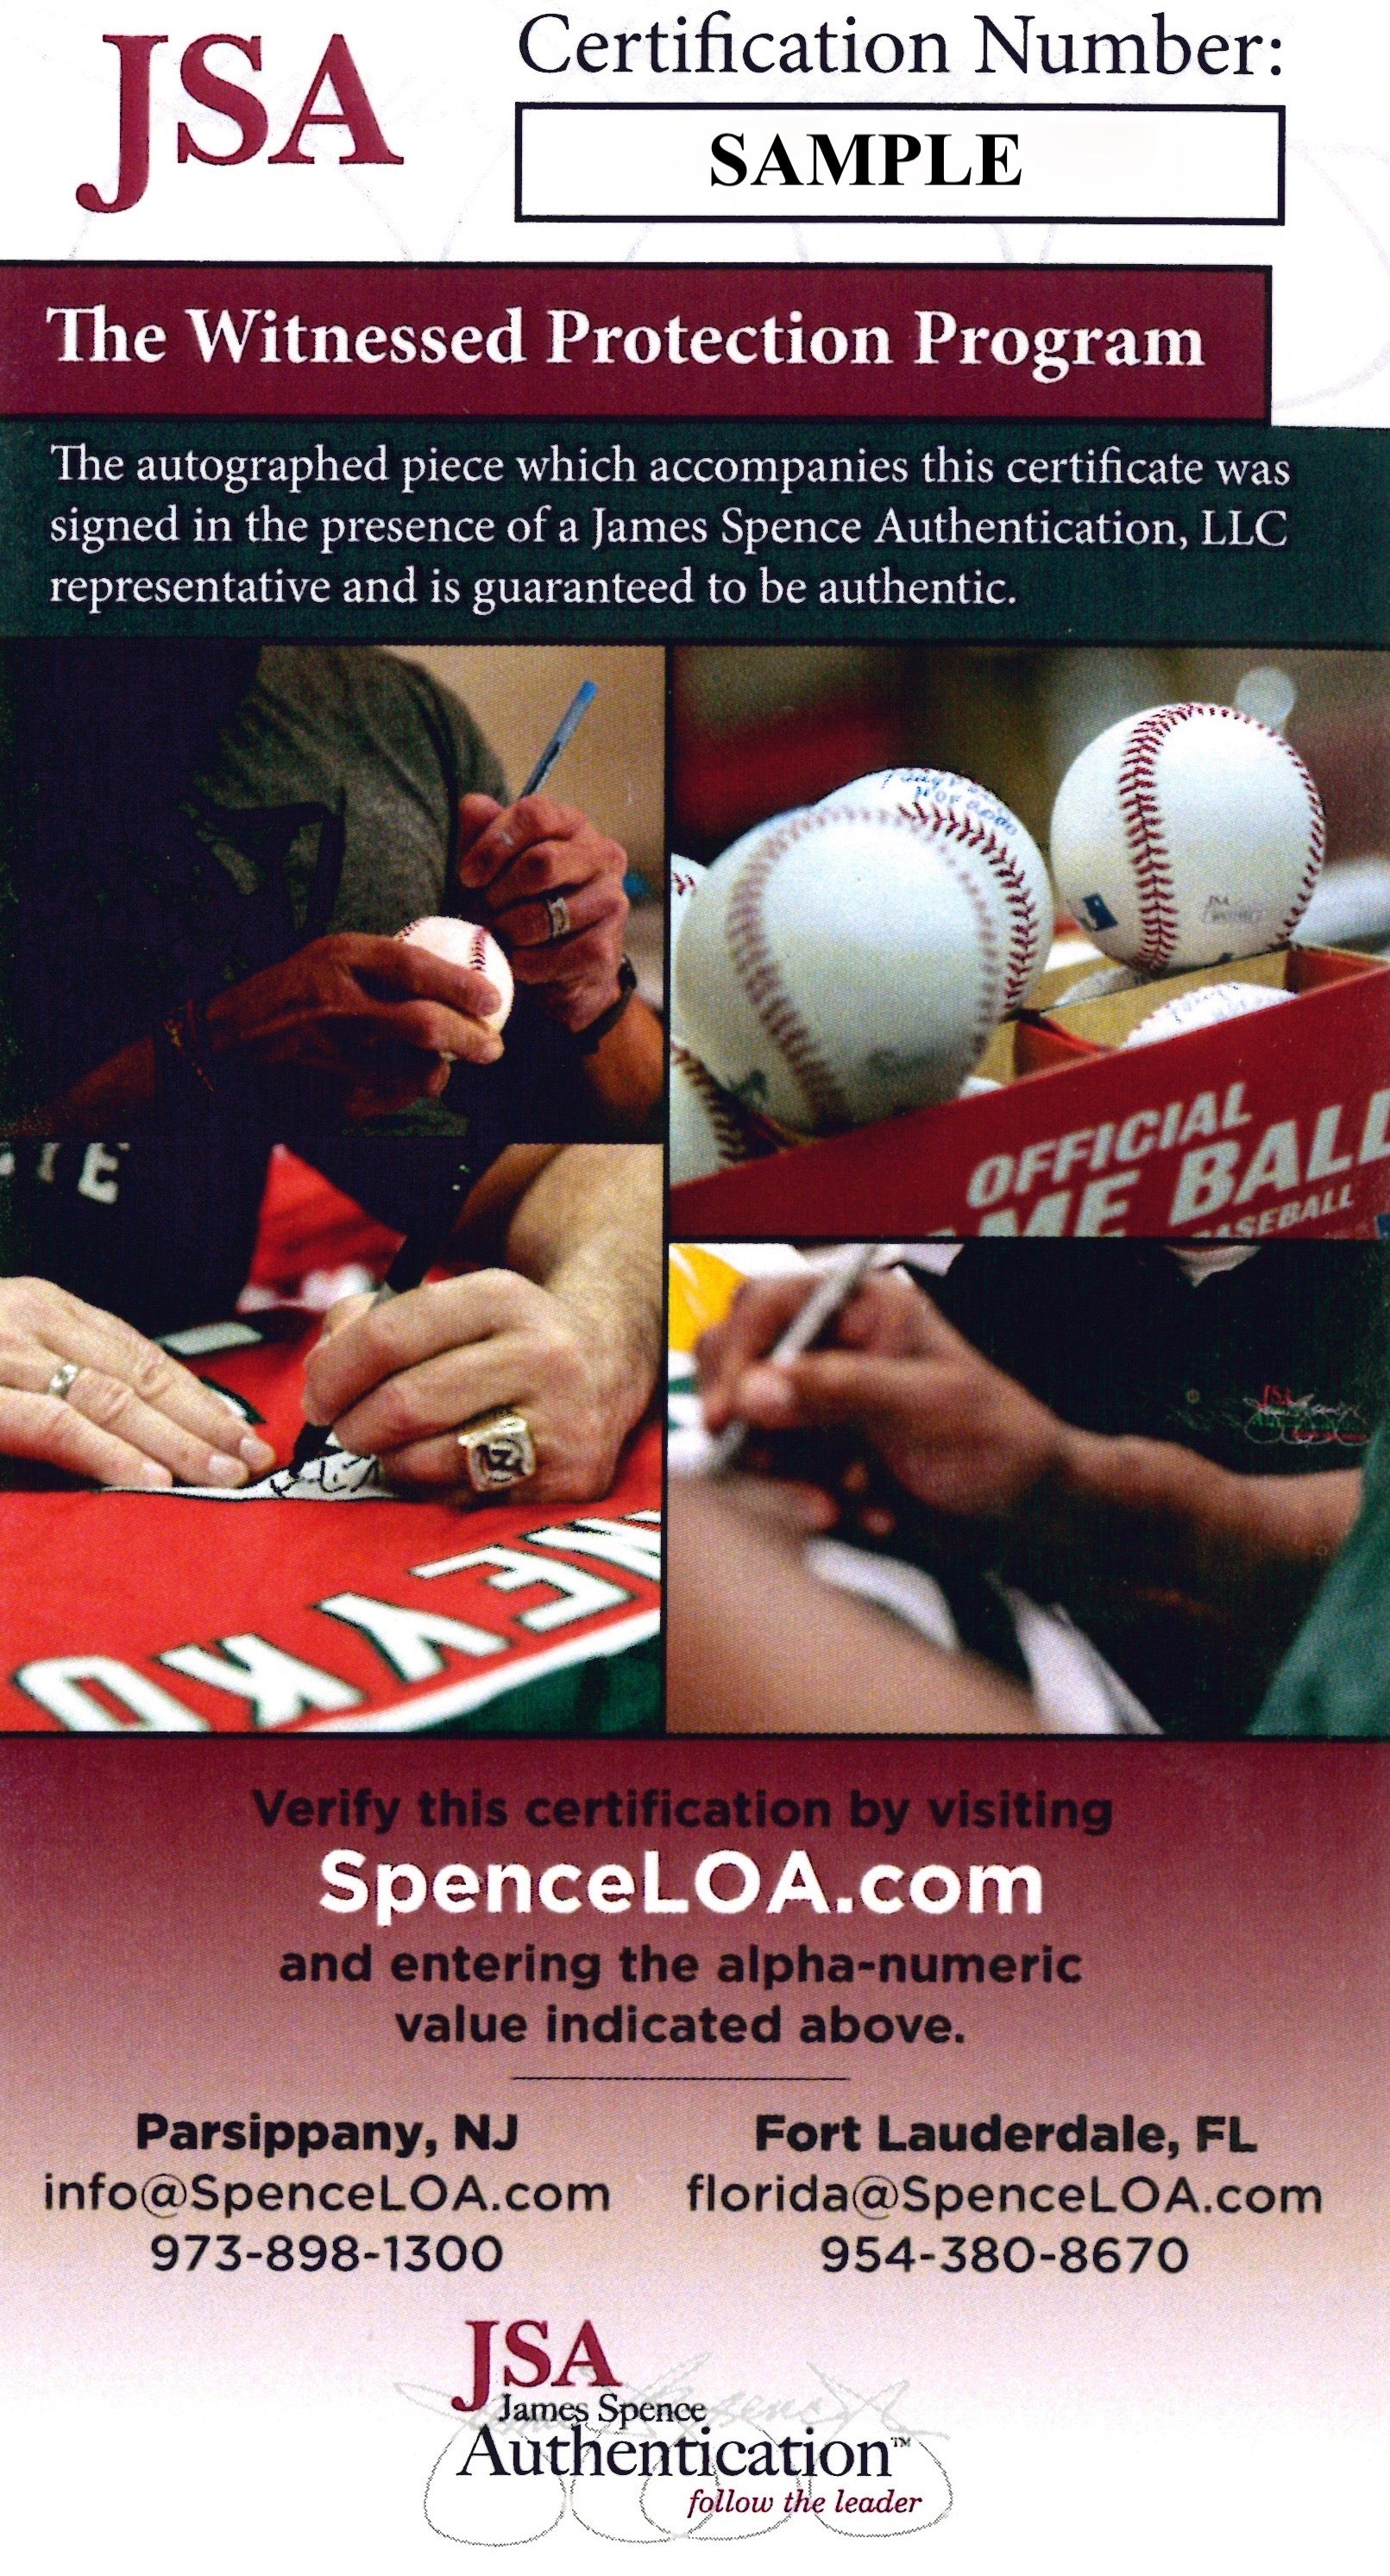 Brad Lidge & Carlos Ruiz Game 1 World Series 2008 LIMITED STOCK Phillies  8X10 Photo